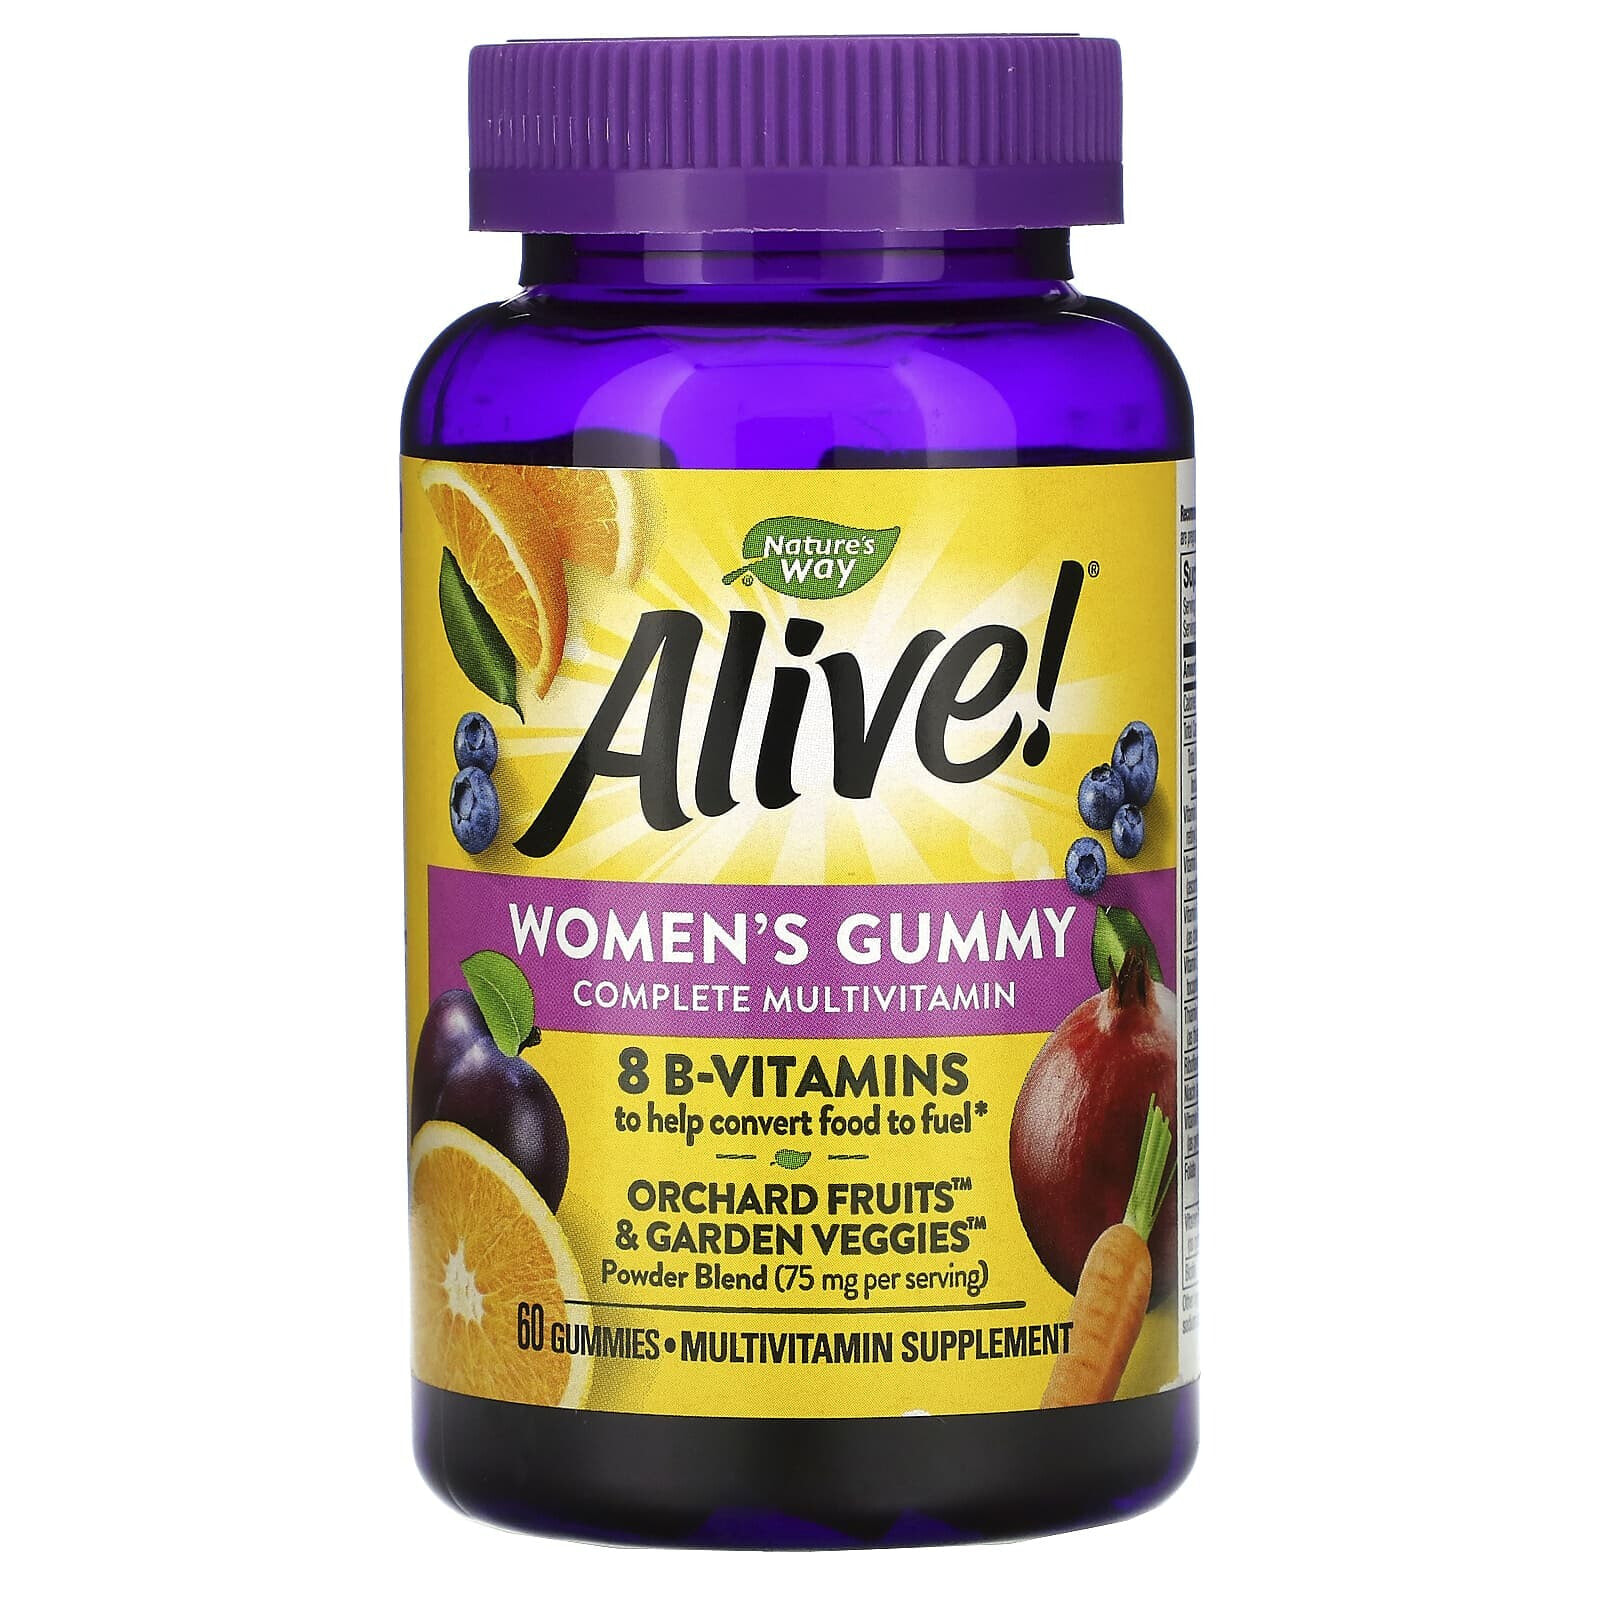 Alive! Women's Gummy Multivitamin, Mixed Berry, 130 Gummies